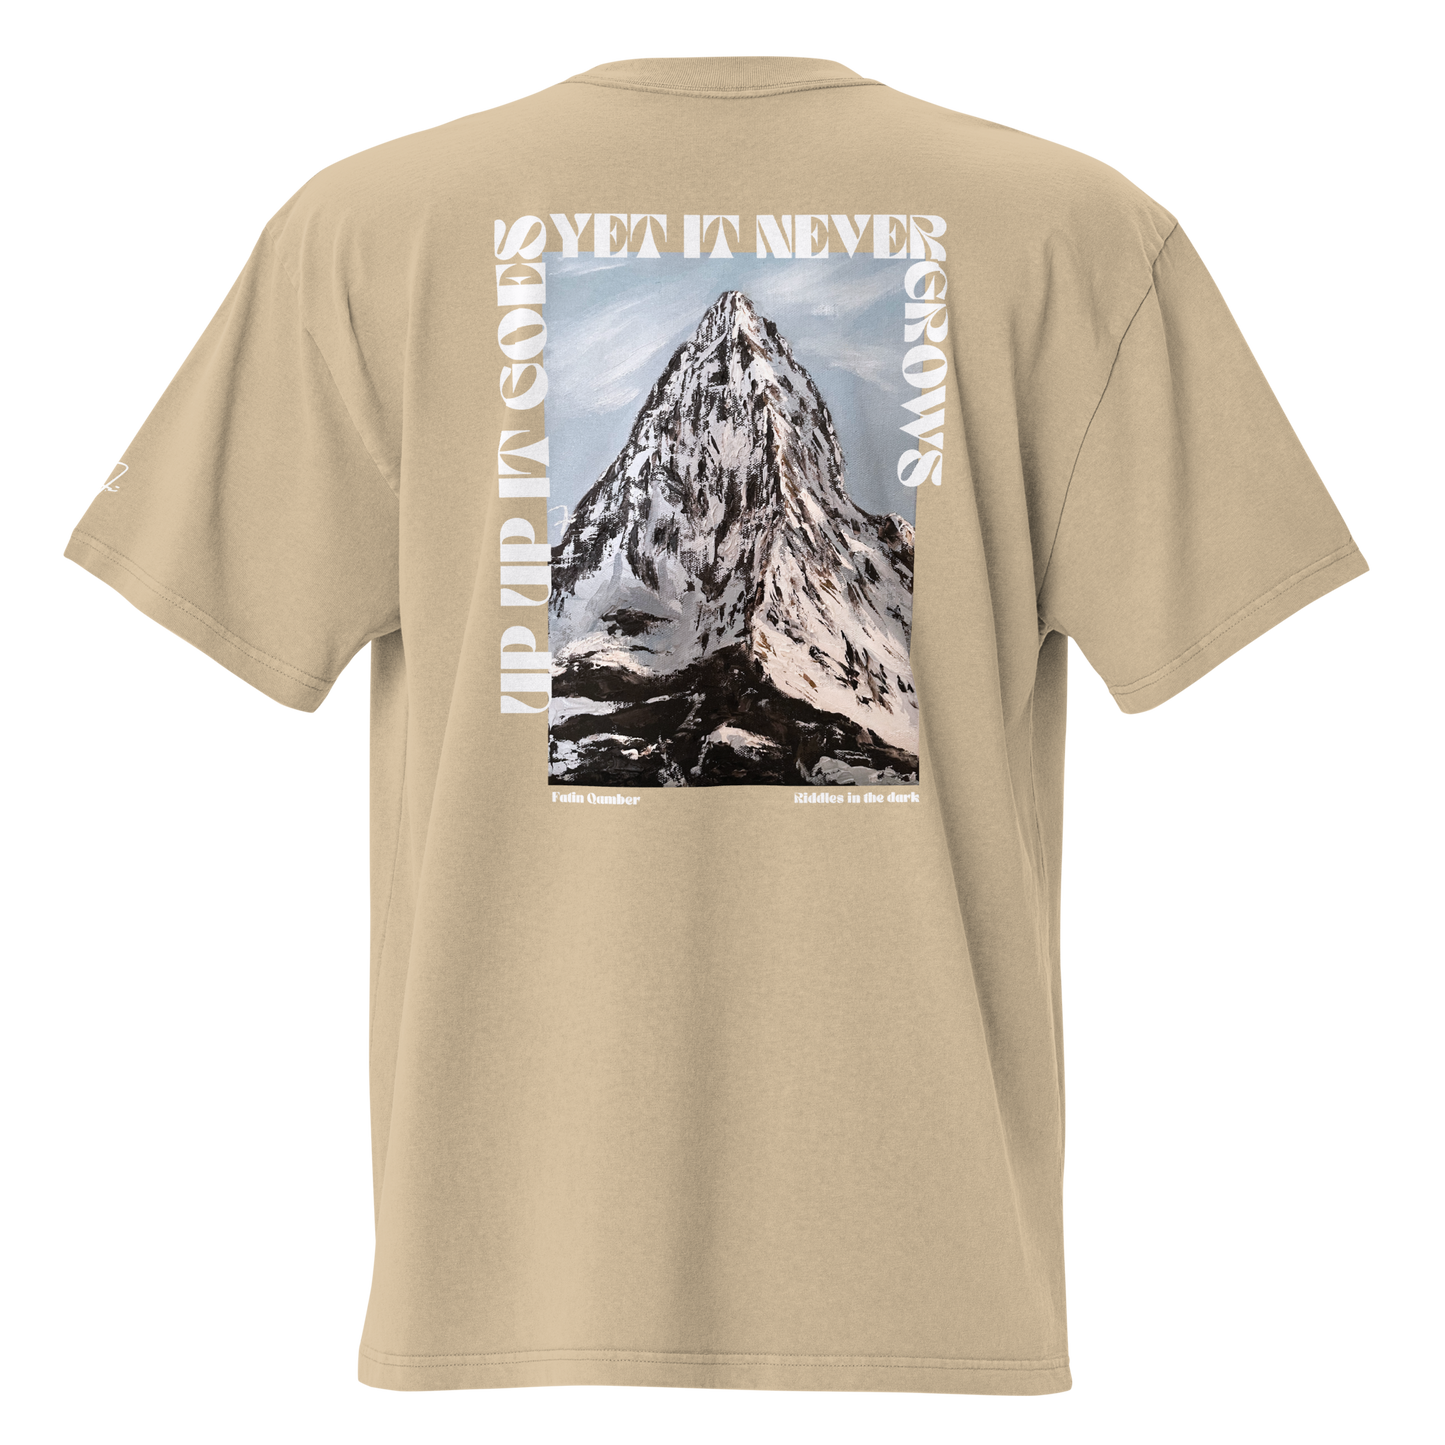 Oversized Mountain Riddle Shirt